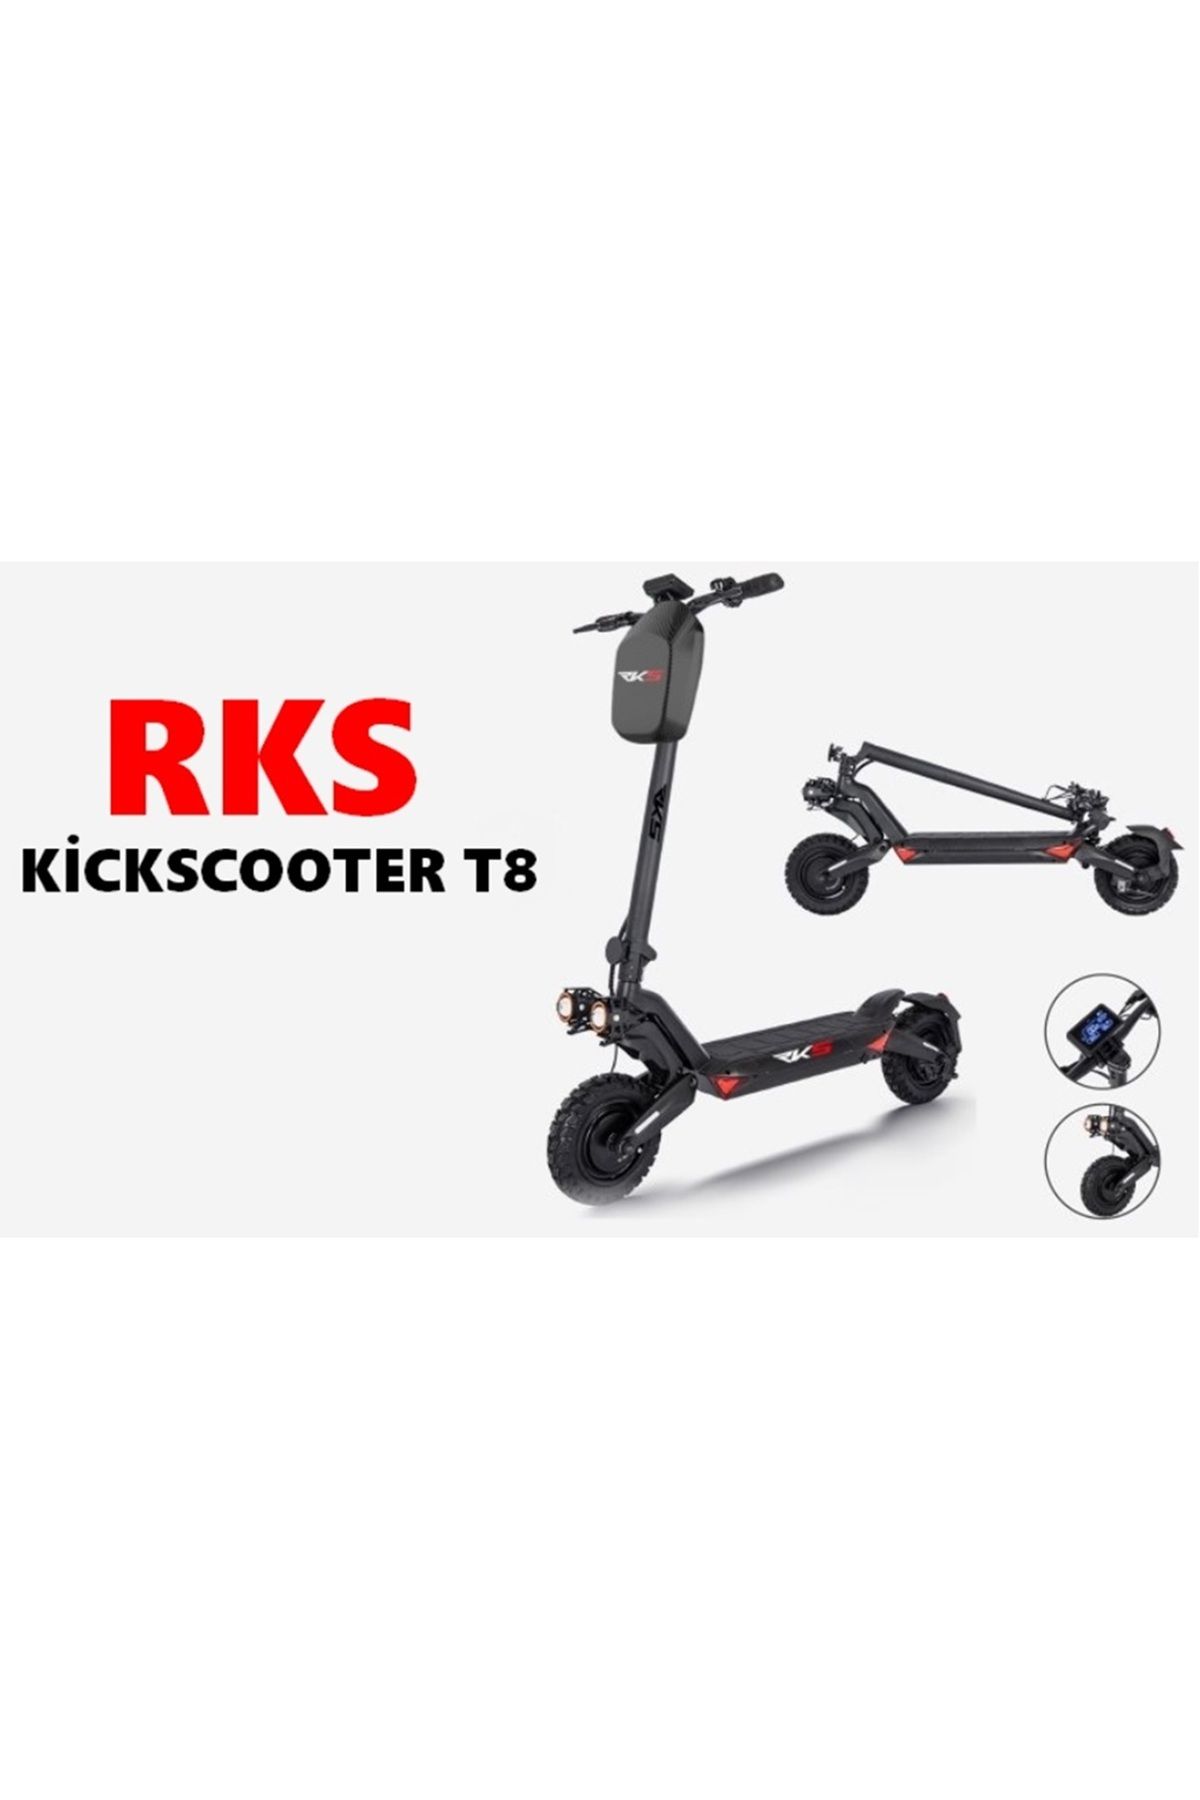 RKS Kickscooter T8 600w